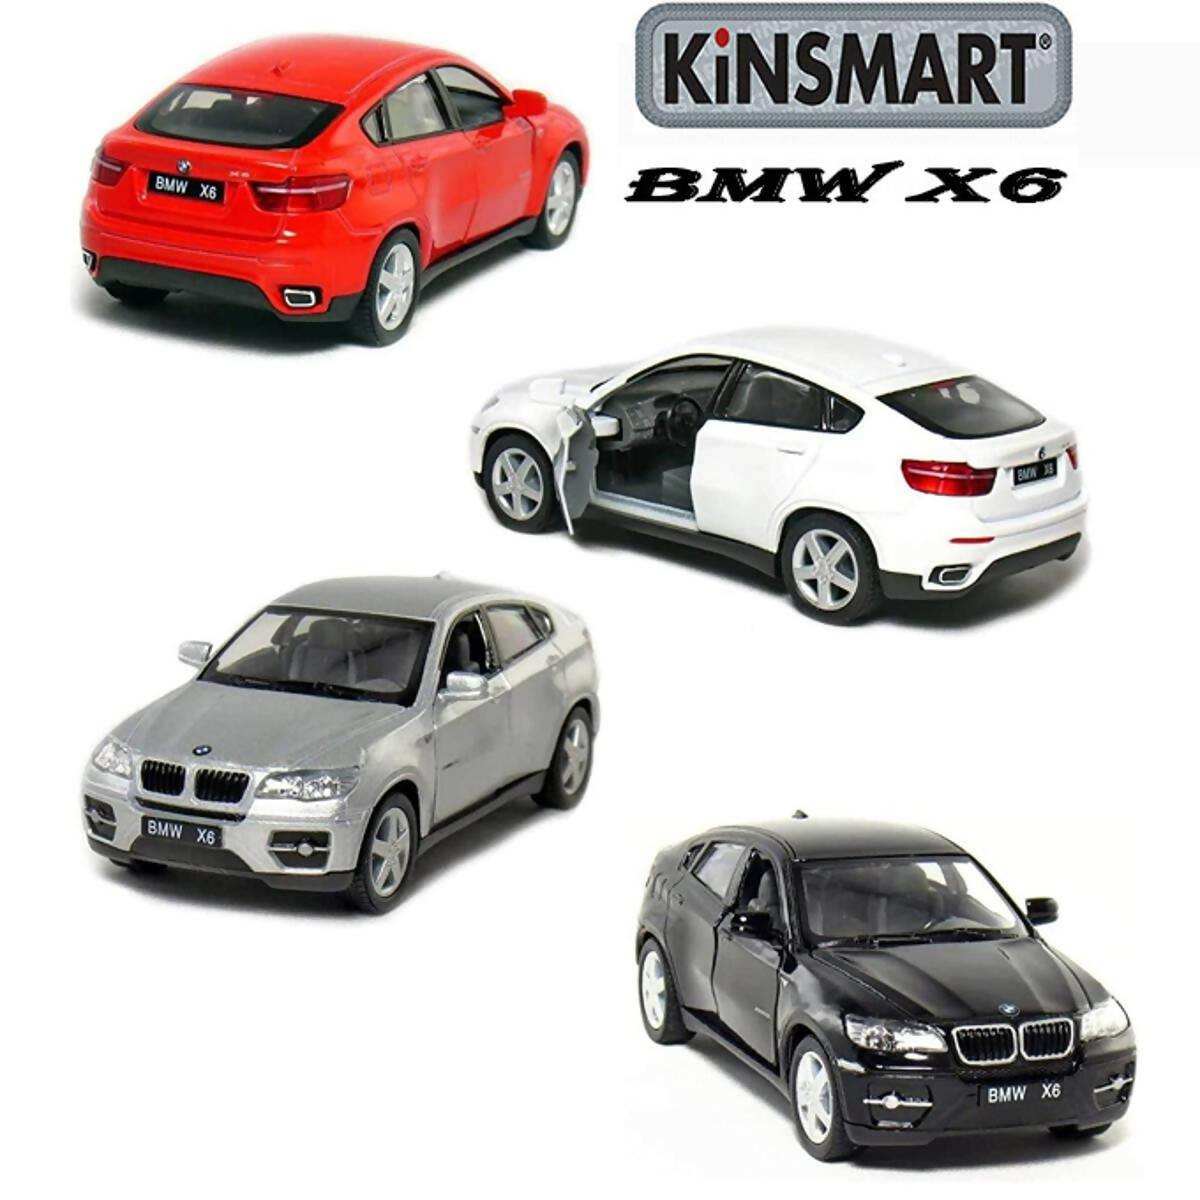 Kinsmart BMW X6 Scaled Model Metal Pull Back Die Cast - Assorted Colors - ValueBox